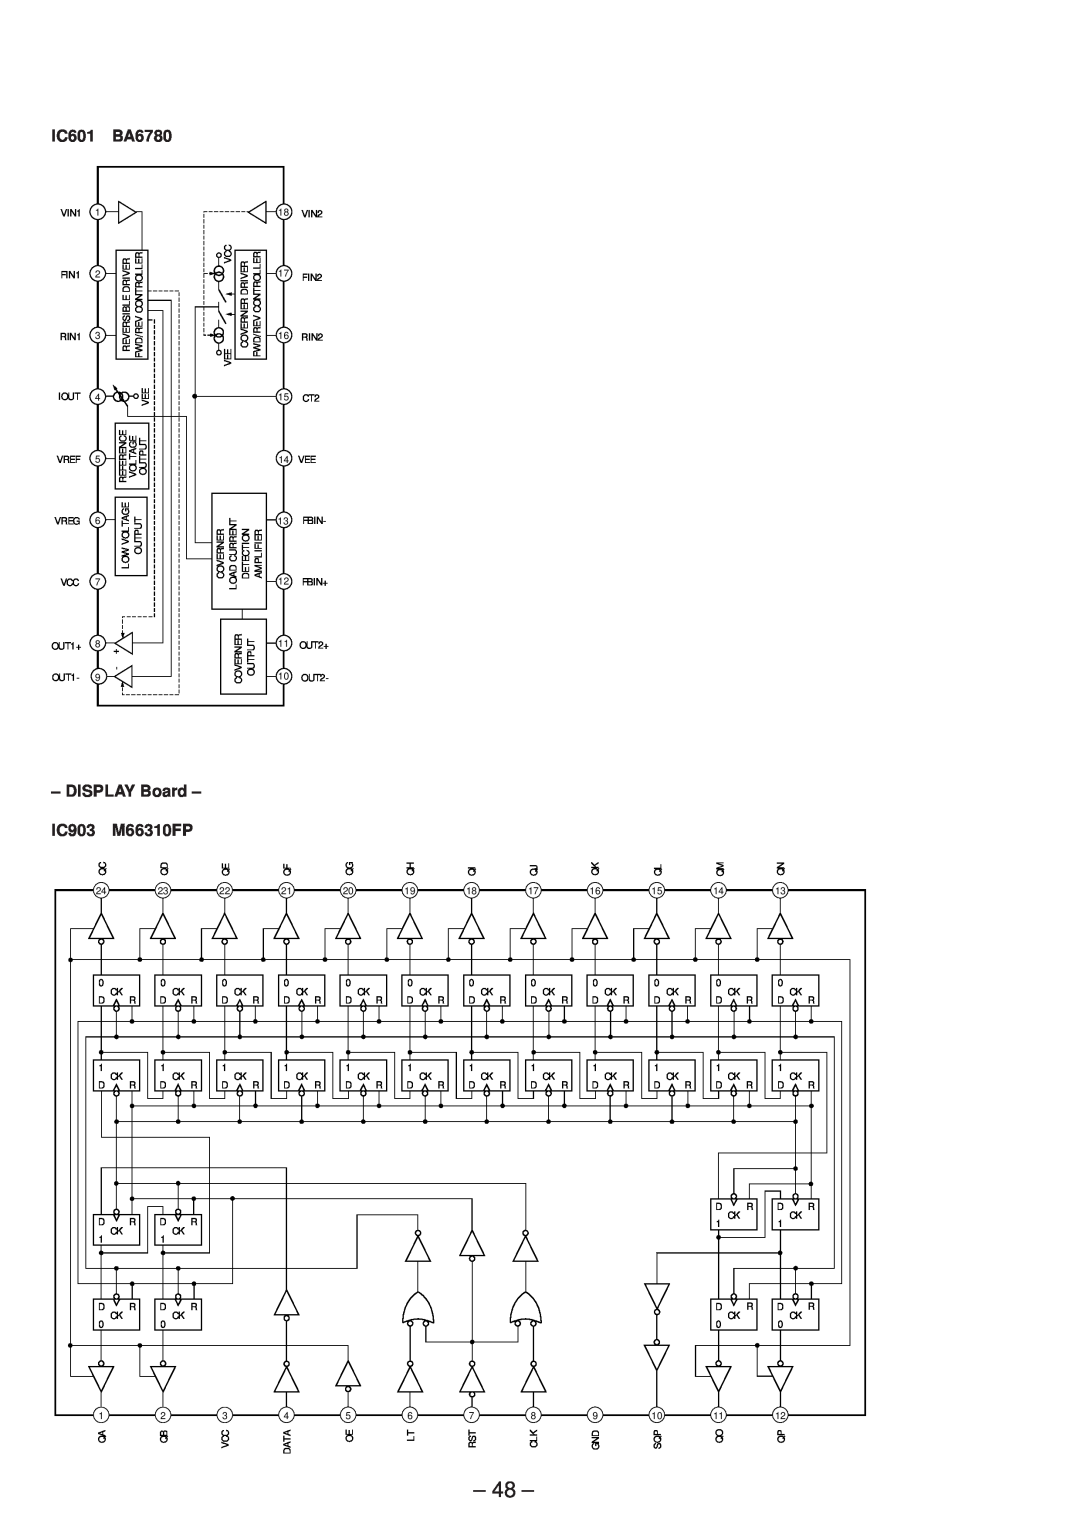 Technicolor - Thomson CDP-CX57 service manual IC601, BA6780, DISPLAY Board, IC903, M66310FP 